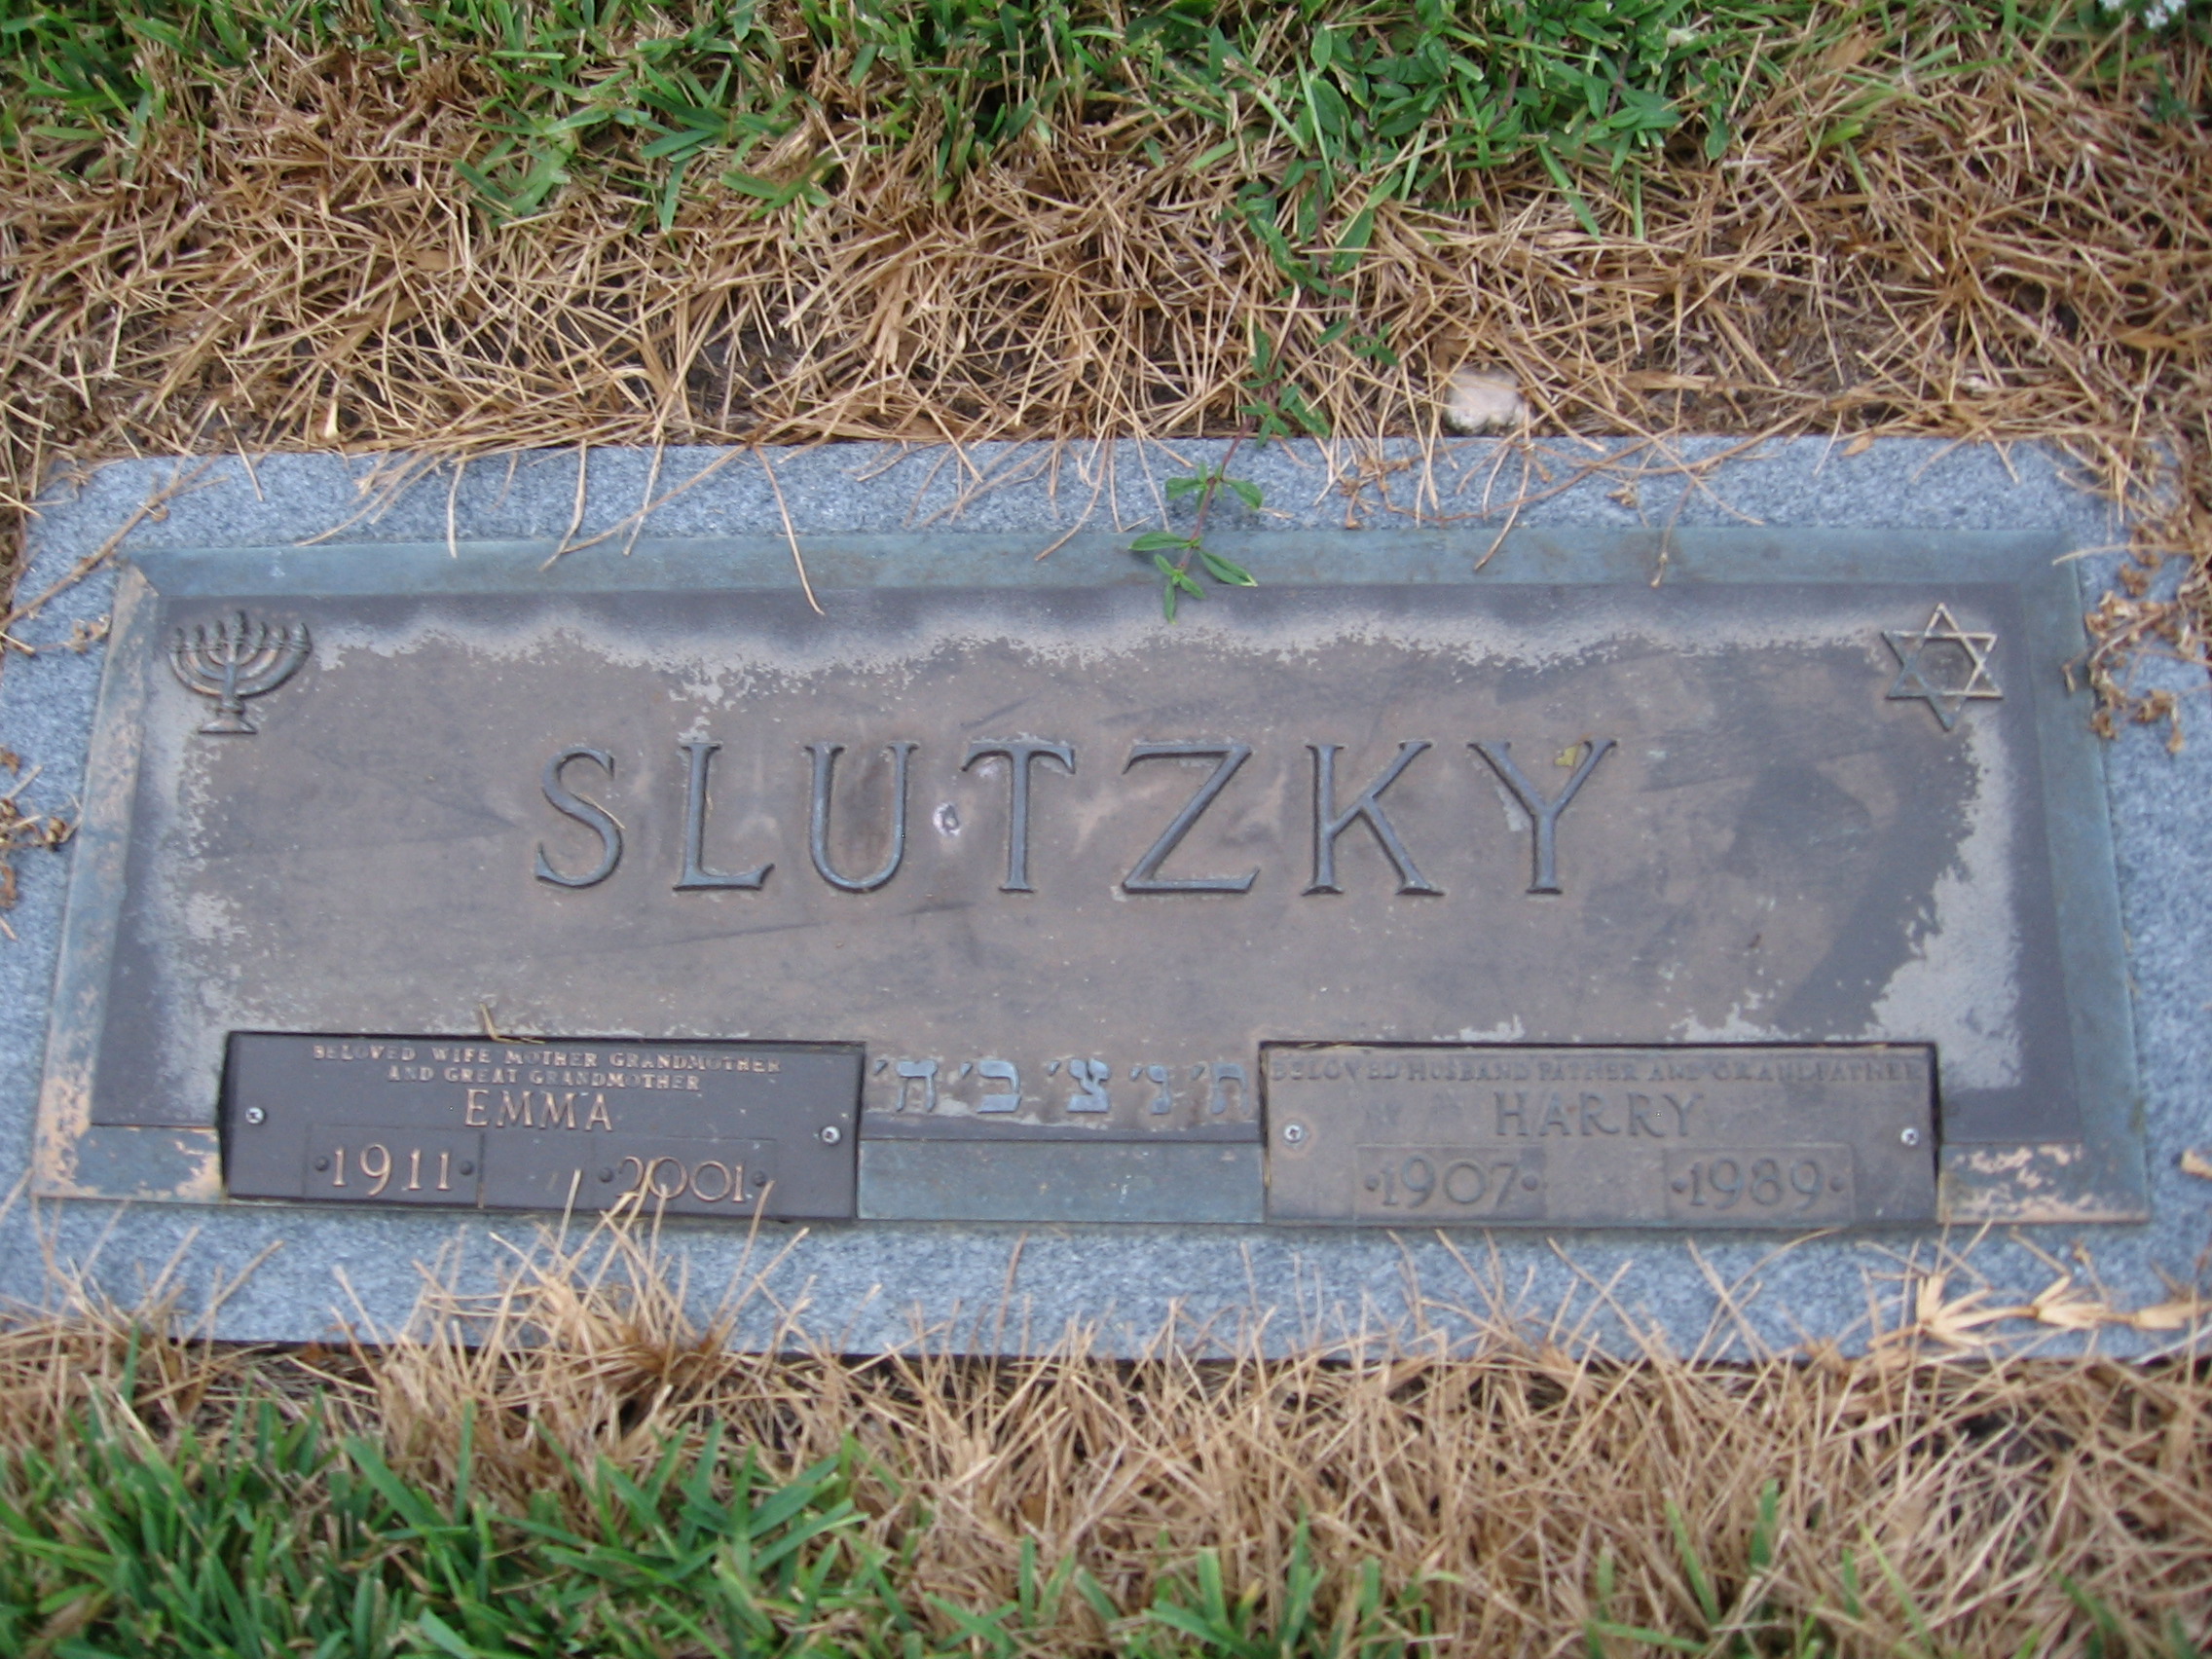 Harry Slutzky